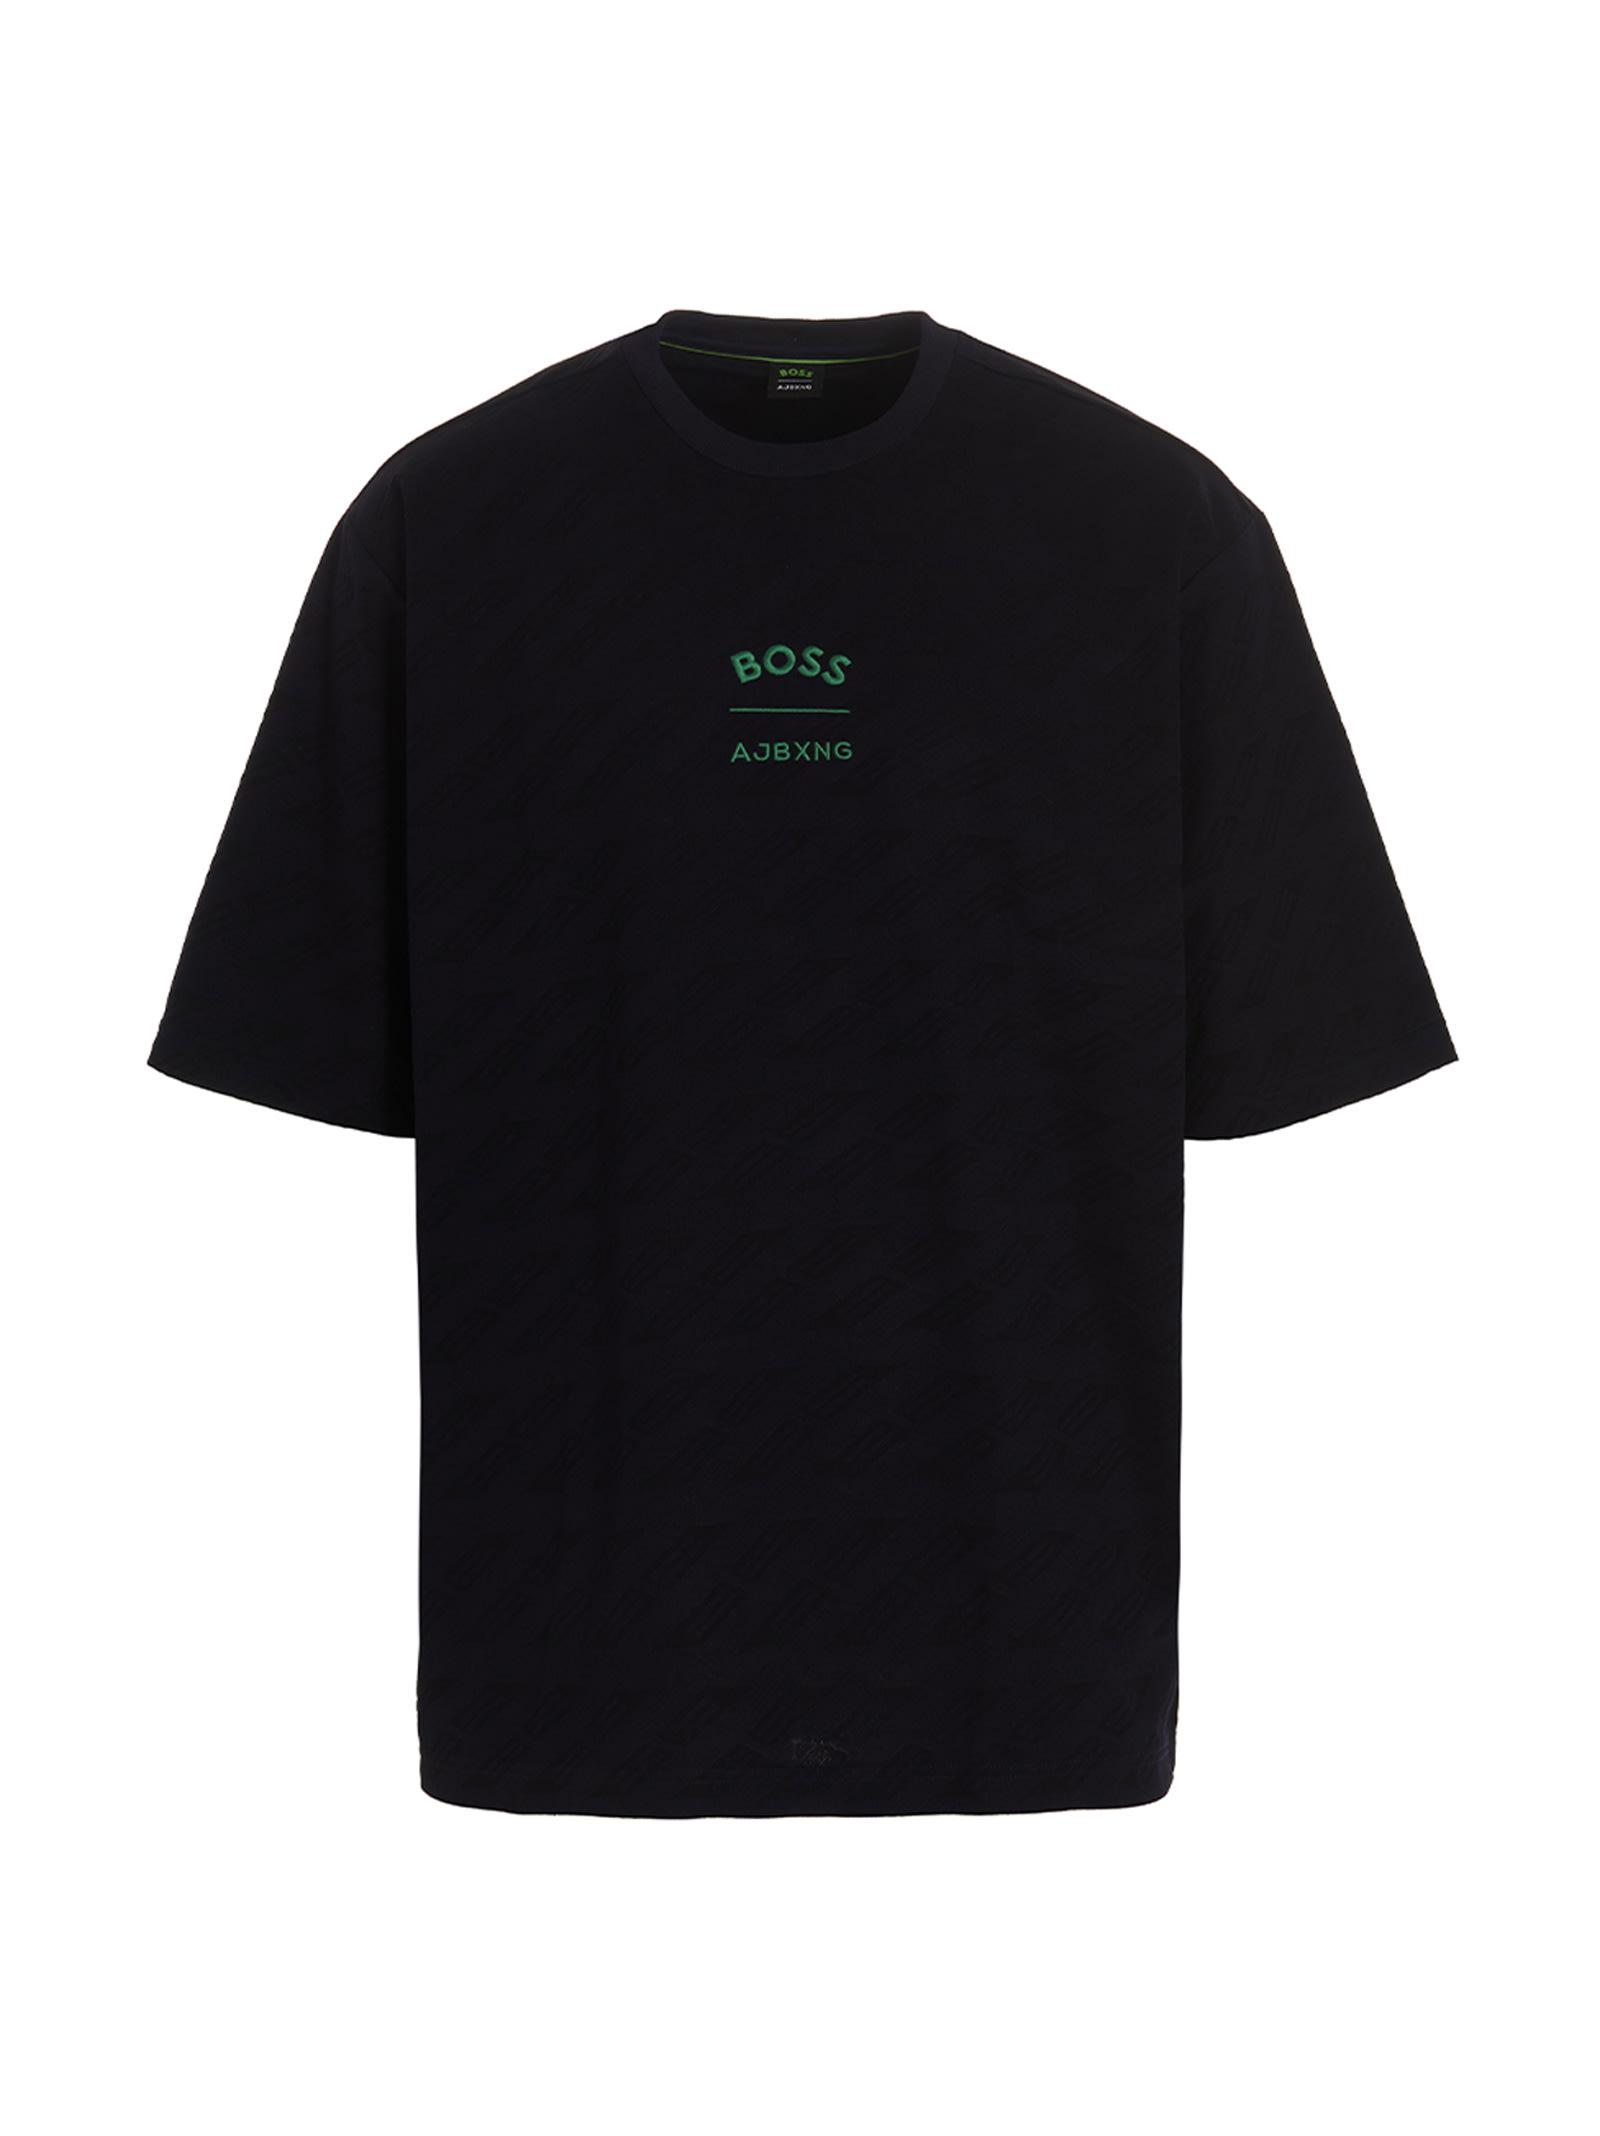 BOSS by HUGO BOSS Ajbxng T-shirt in Black for Men | Lyst